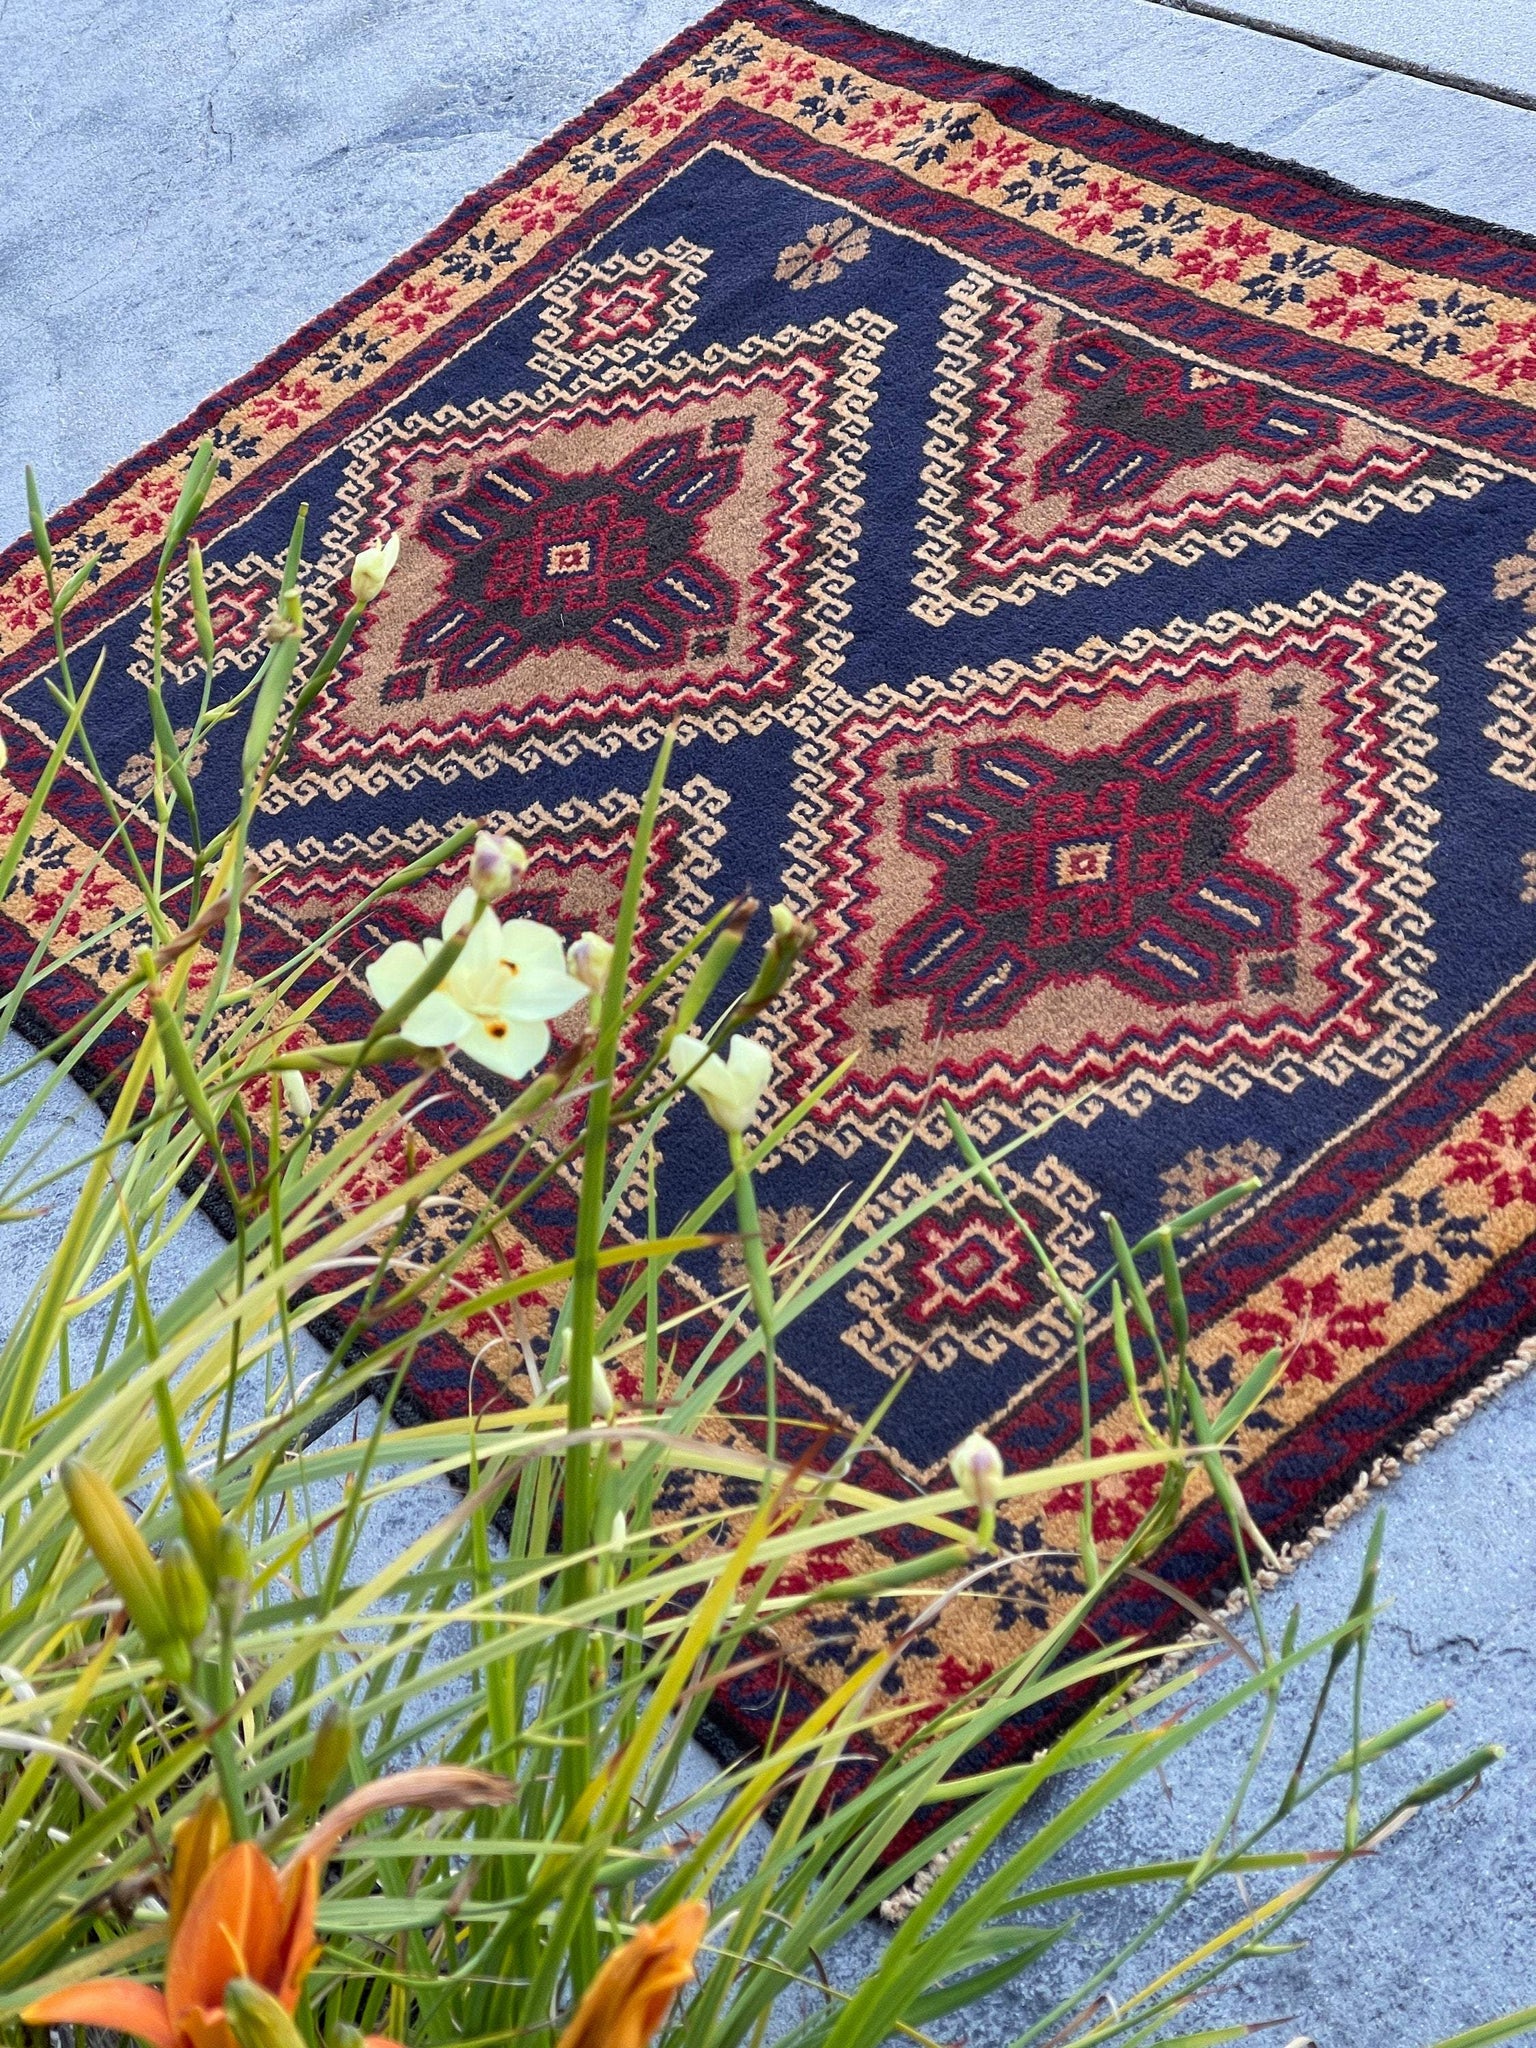 3x5 (90x150) Handmade Afghan Kilim Rug | Red Navy Blue Gold Tan | Flatweave Boho Tribal Turkish Moroccan Oriental Wool Outdoor